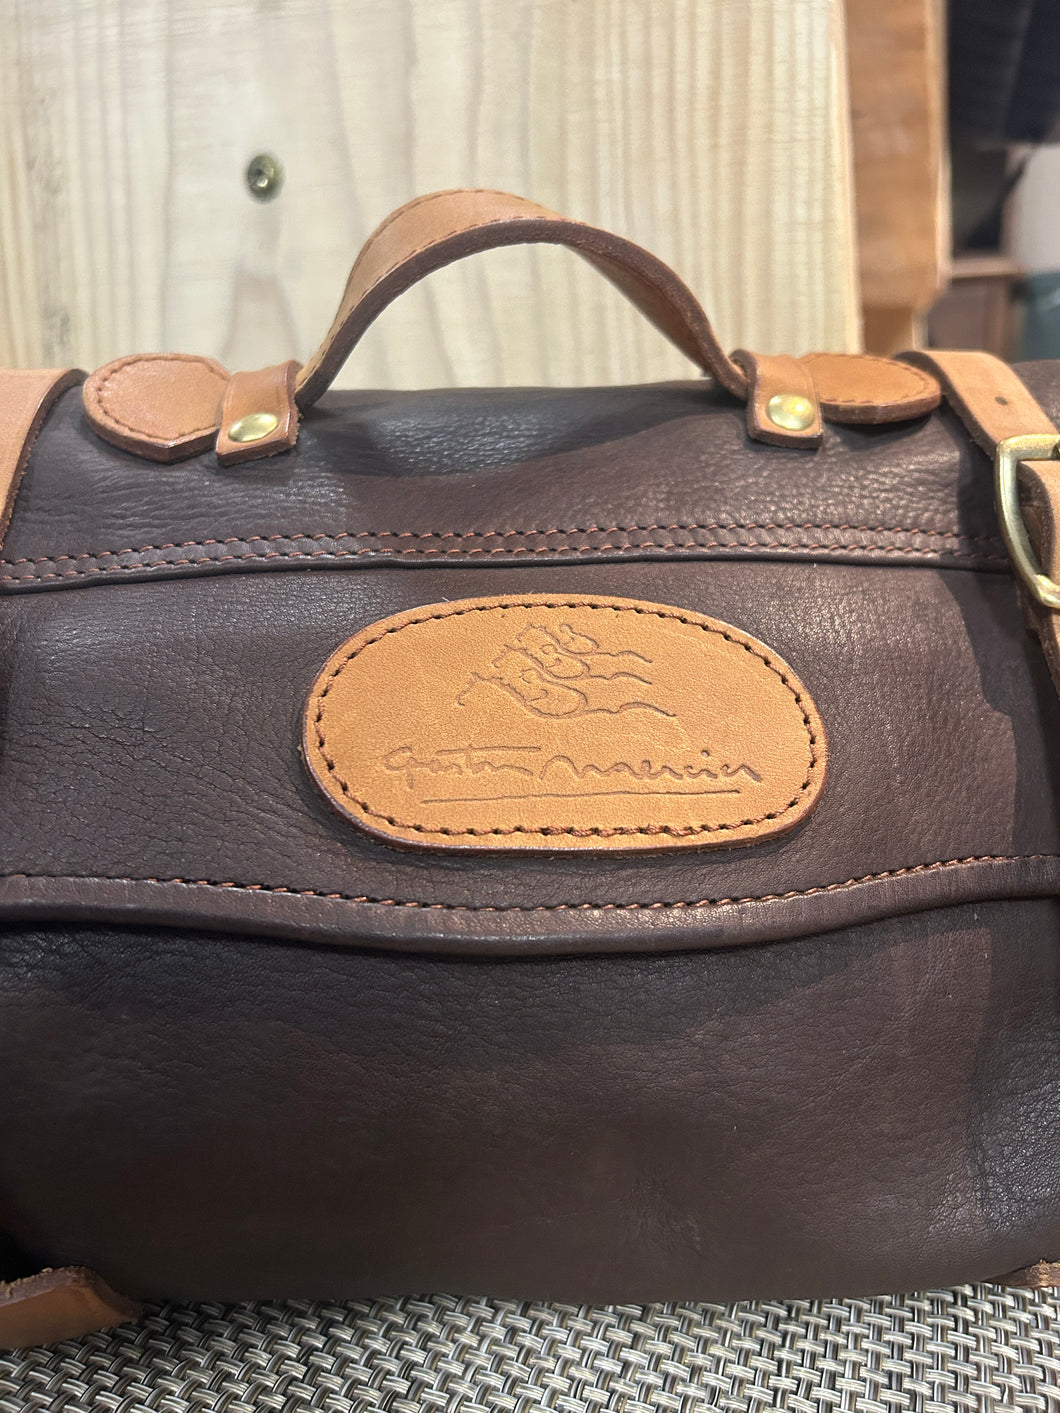 Gaston Mercier Cantle French Leather Bag